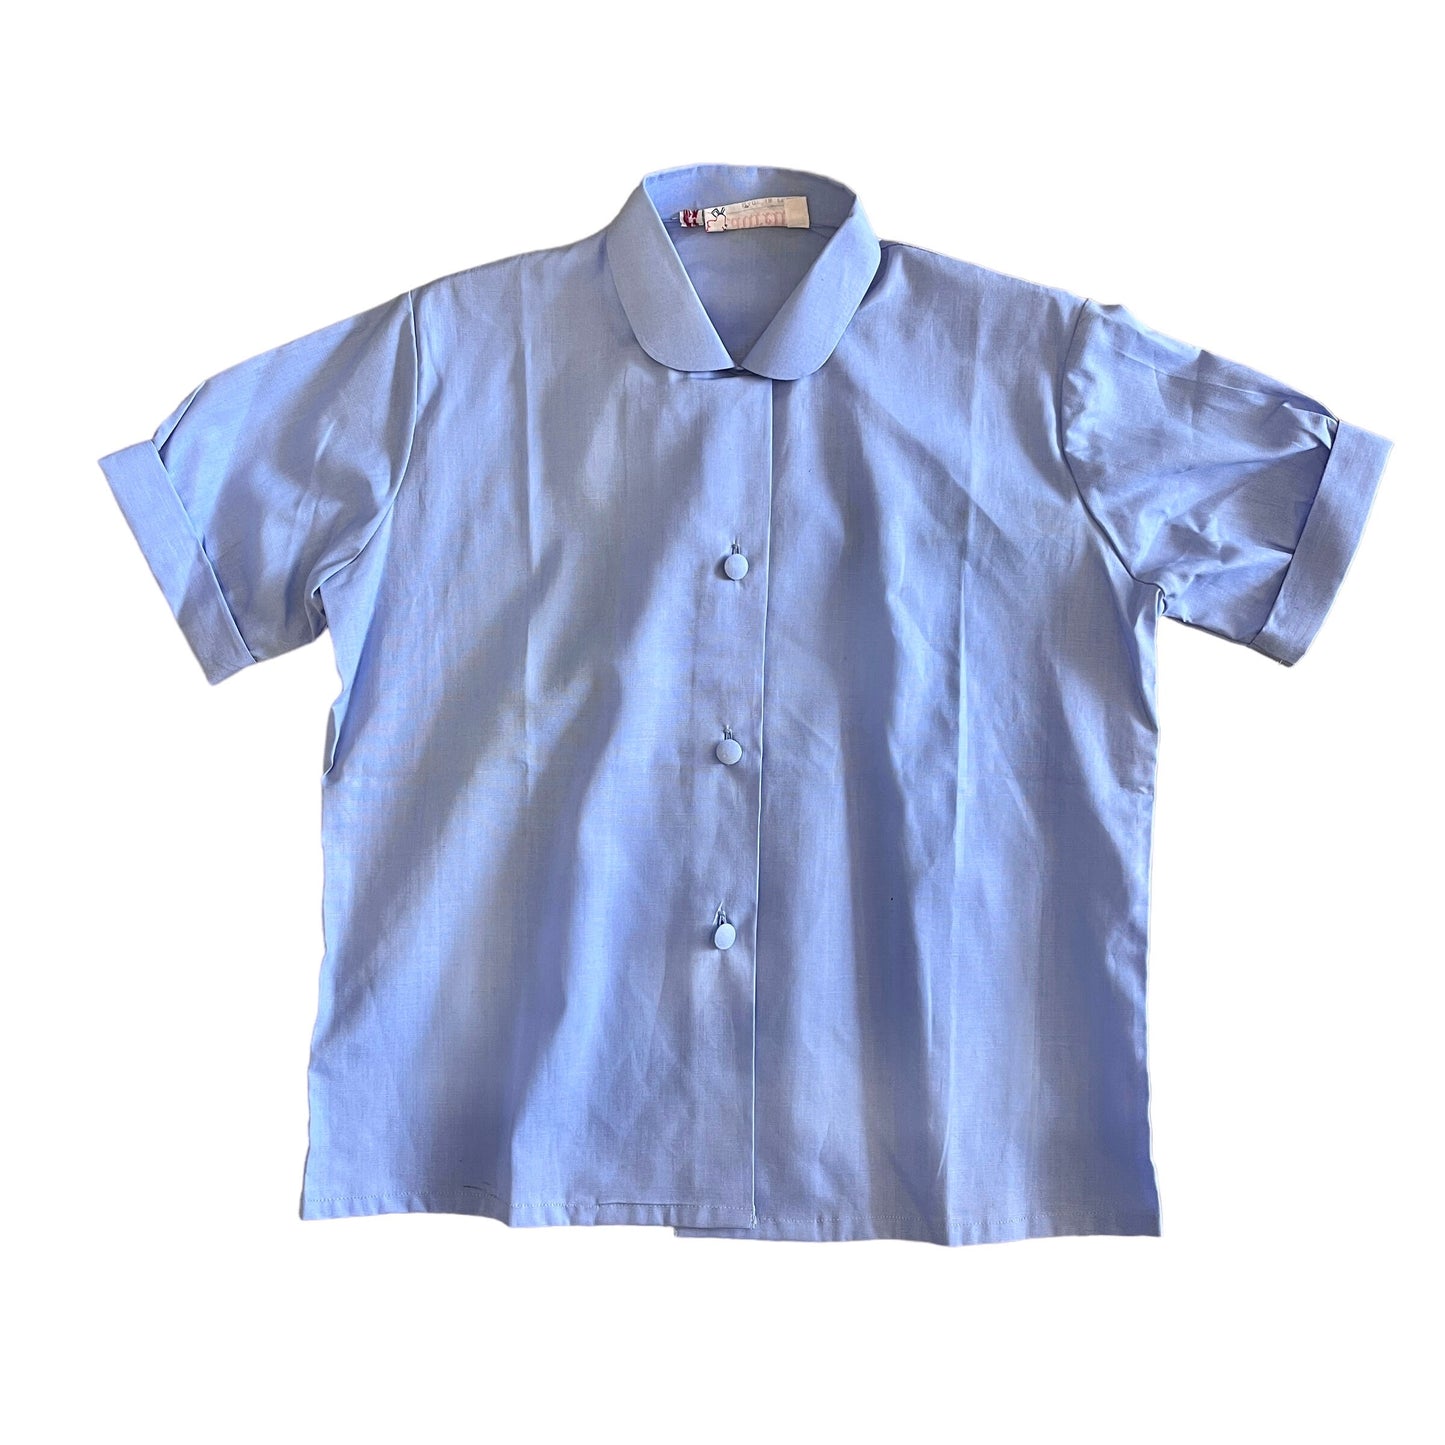 1960's Blue Peter Pan Collar Shirt / 8-10Y